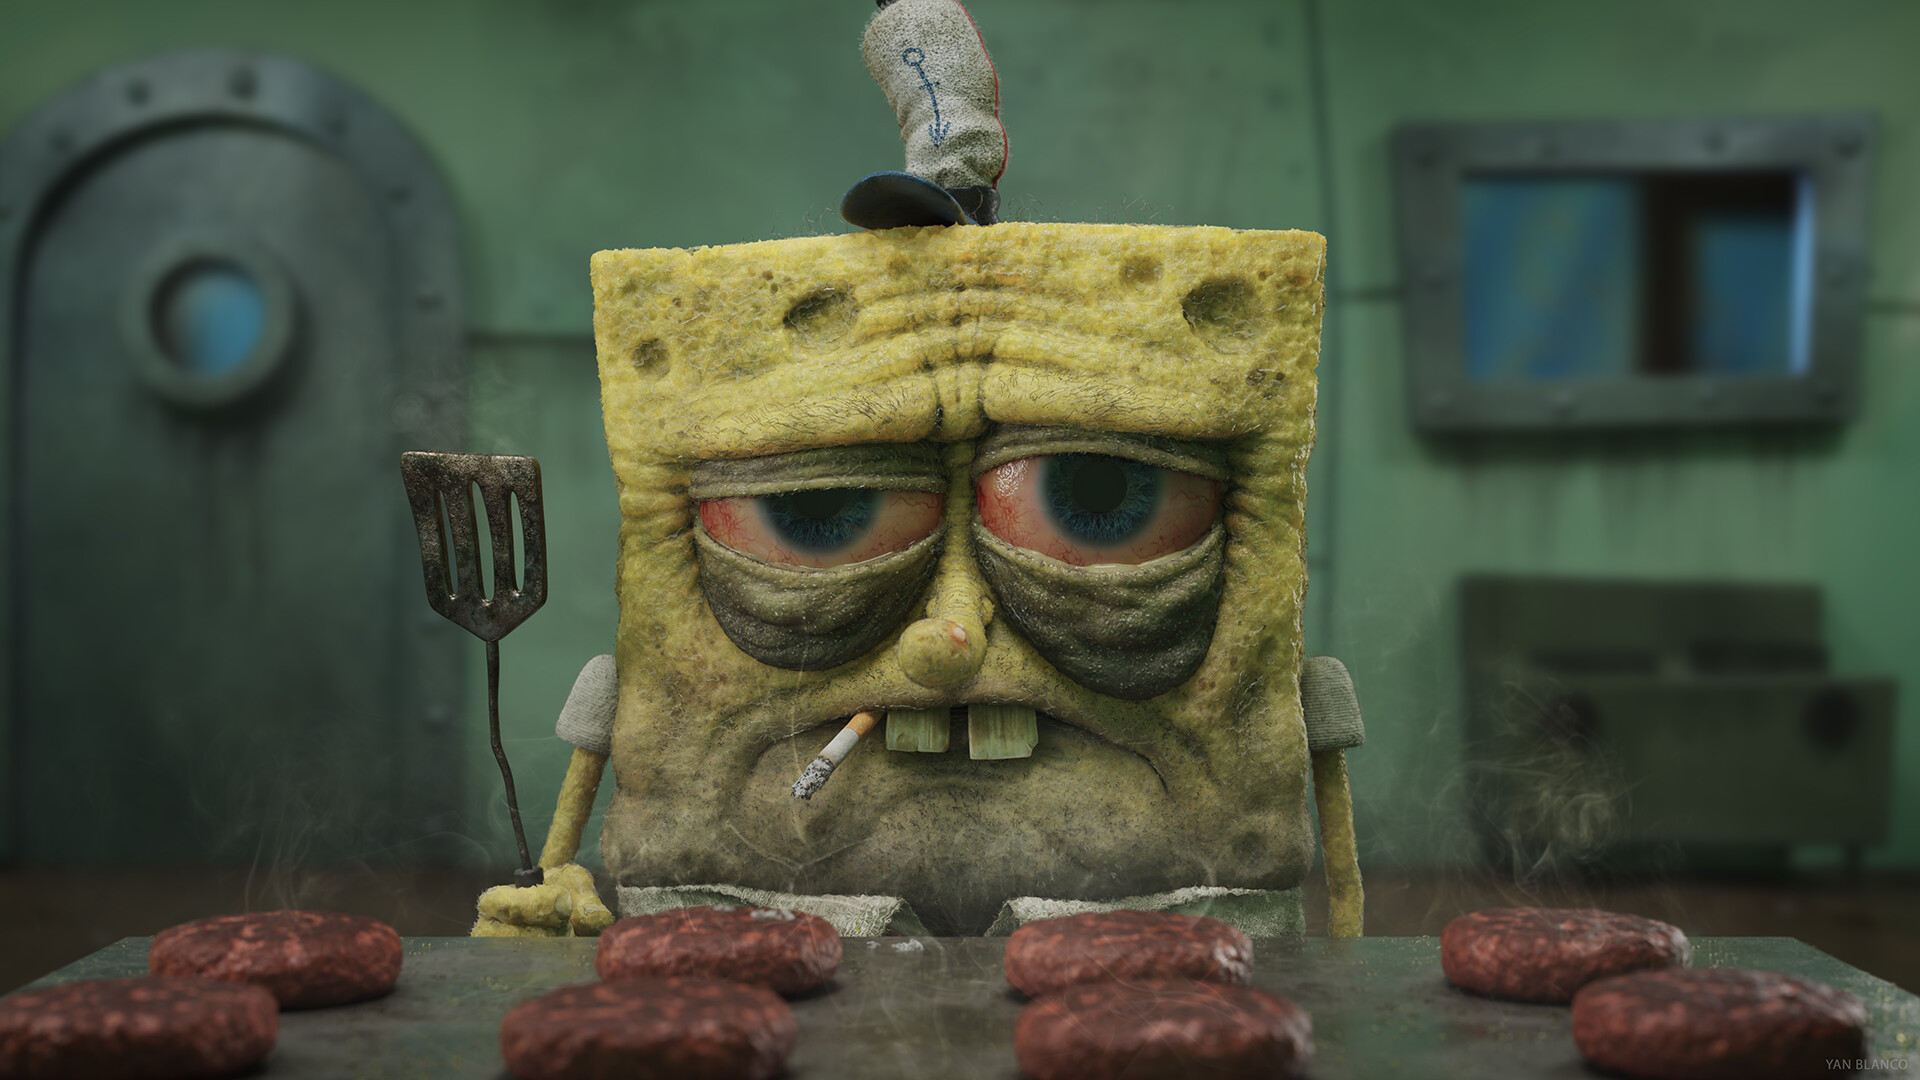 Spongebob Squarepants HD Wallpaper by Yan Blanco